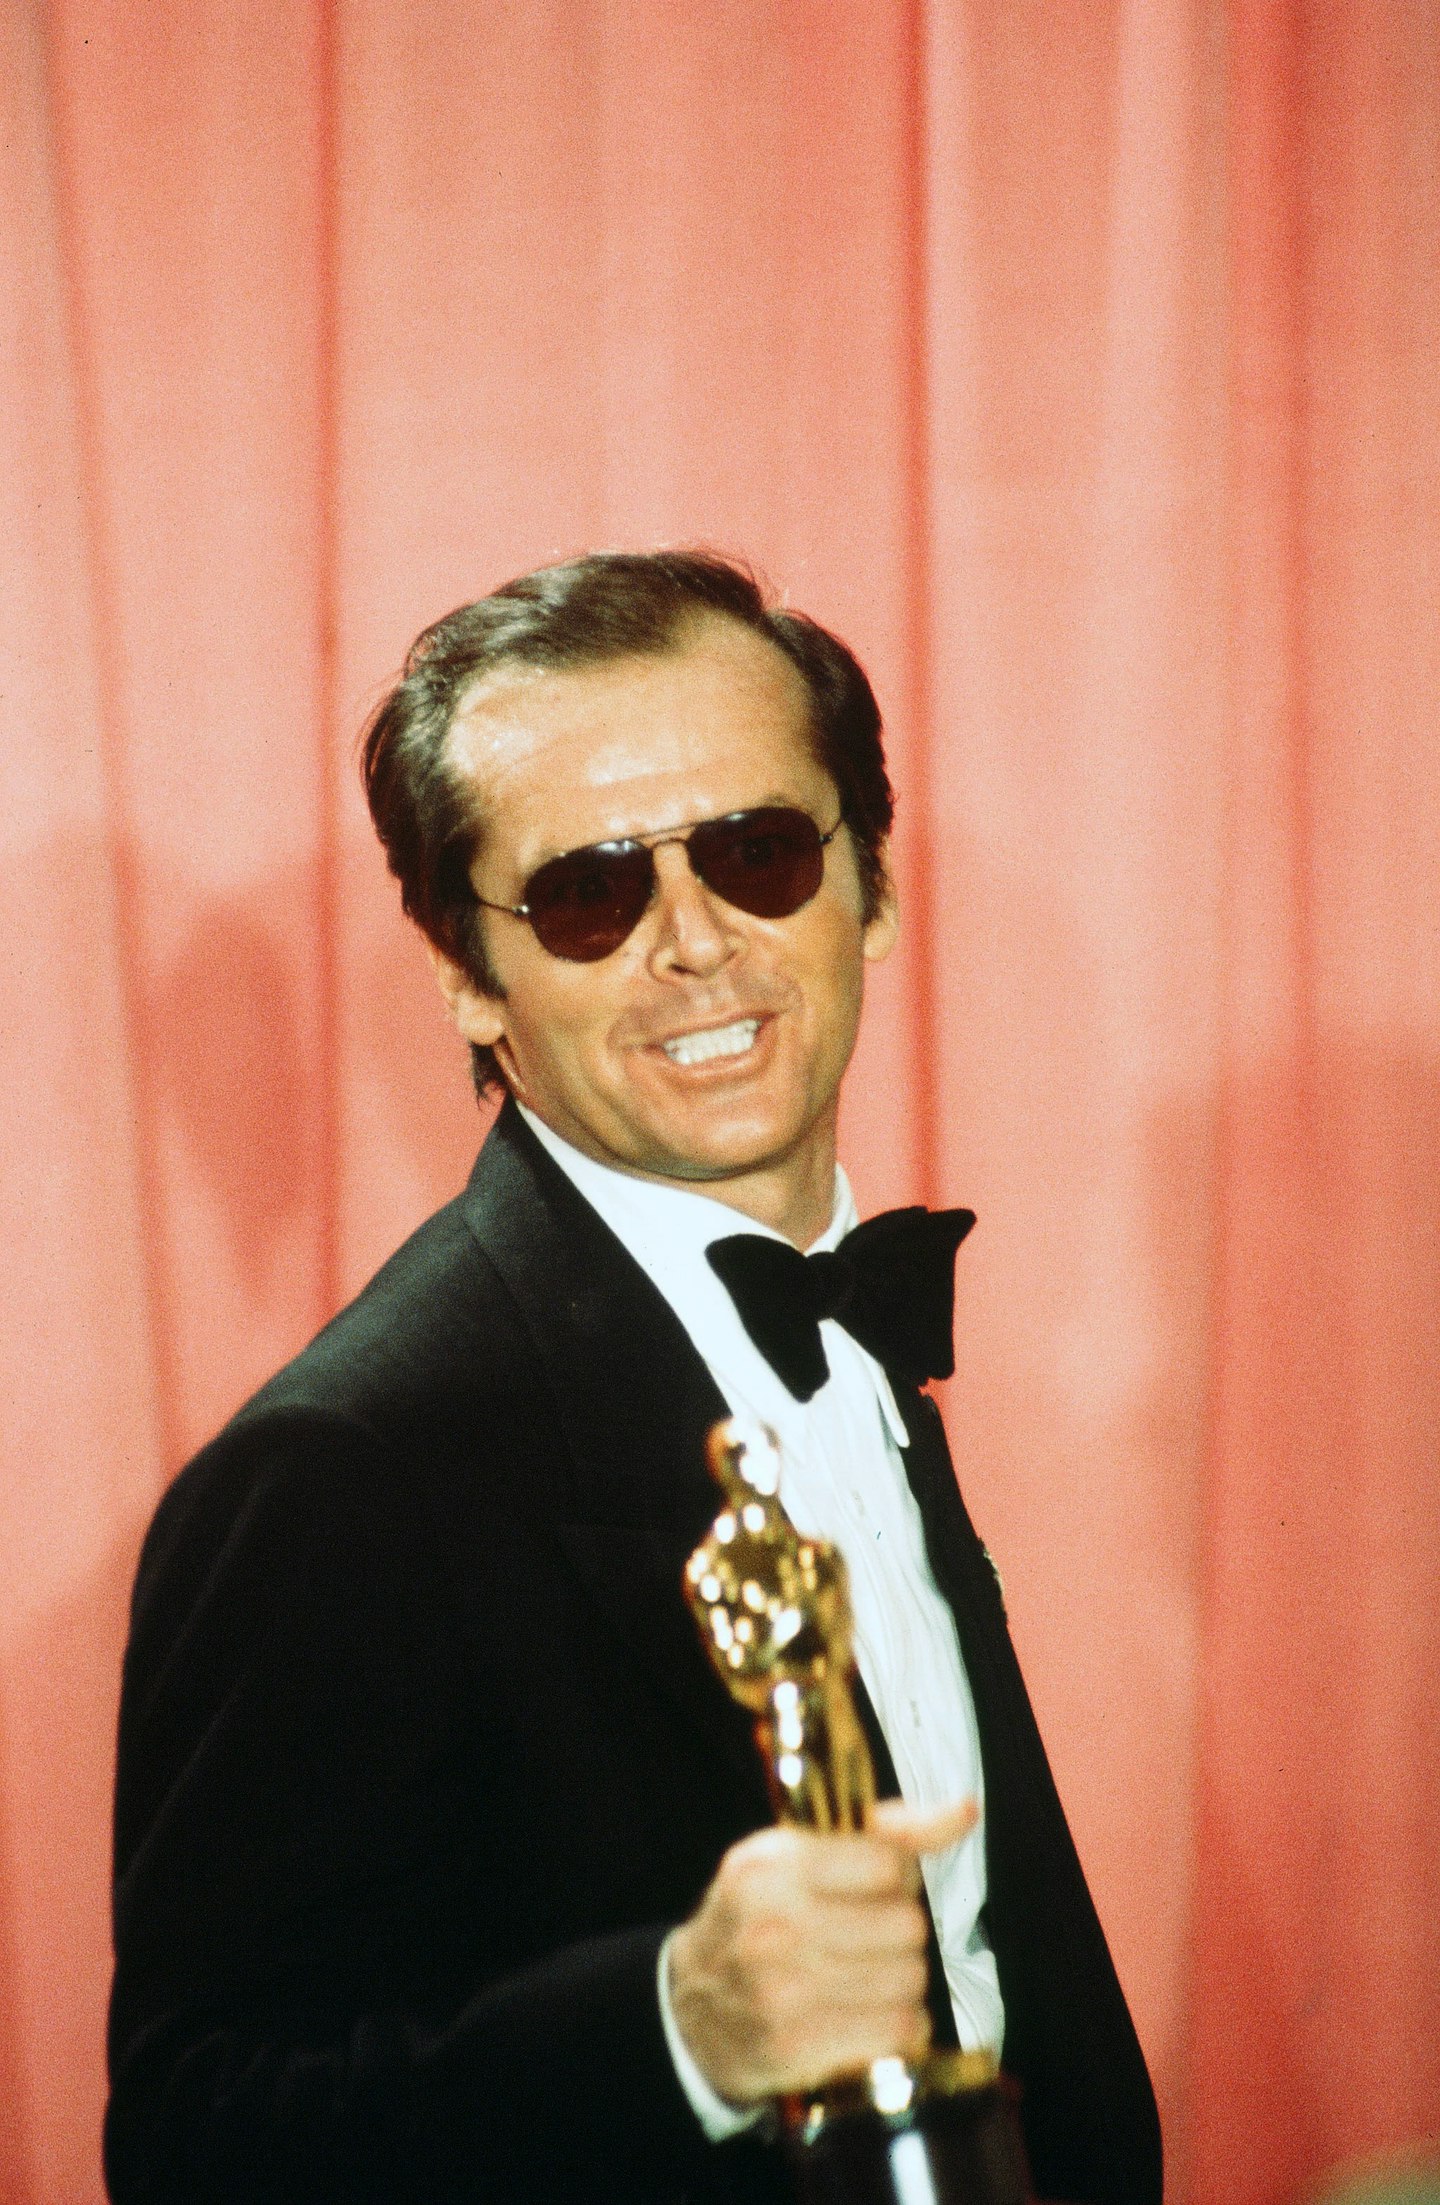 Jack Nicholson in 1976